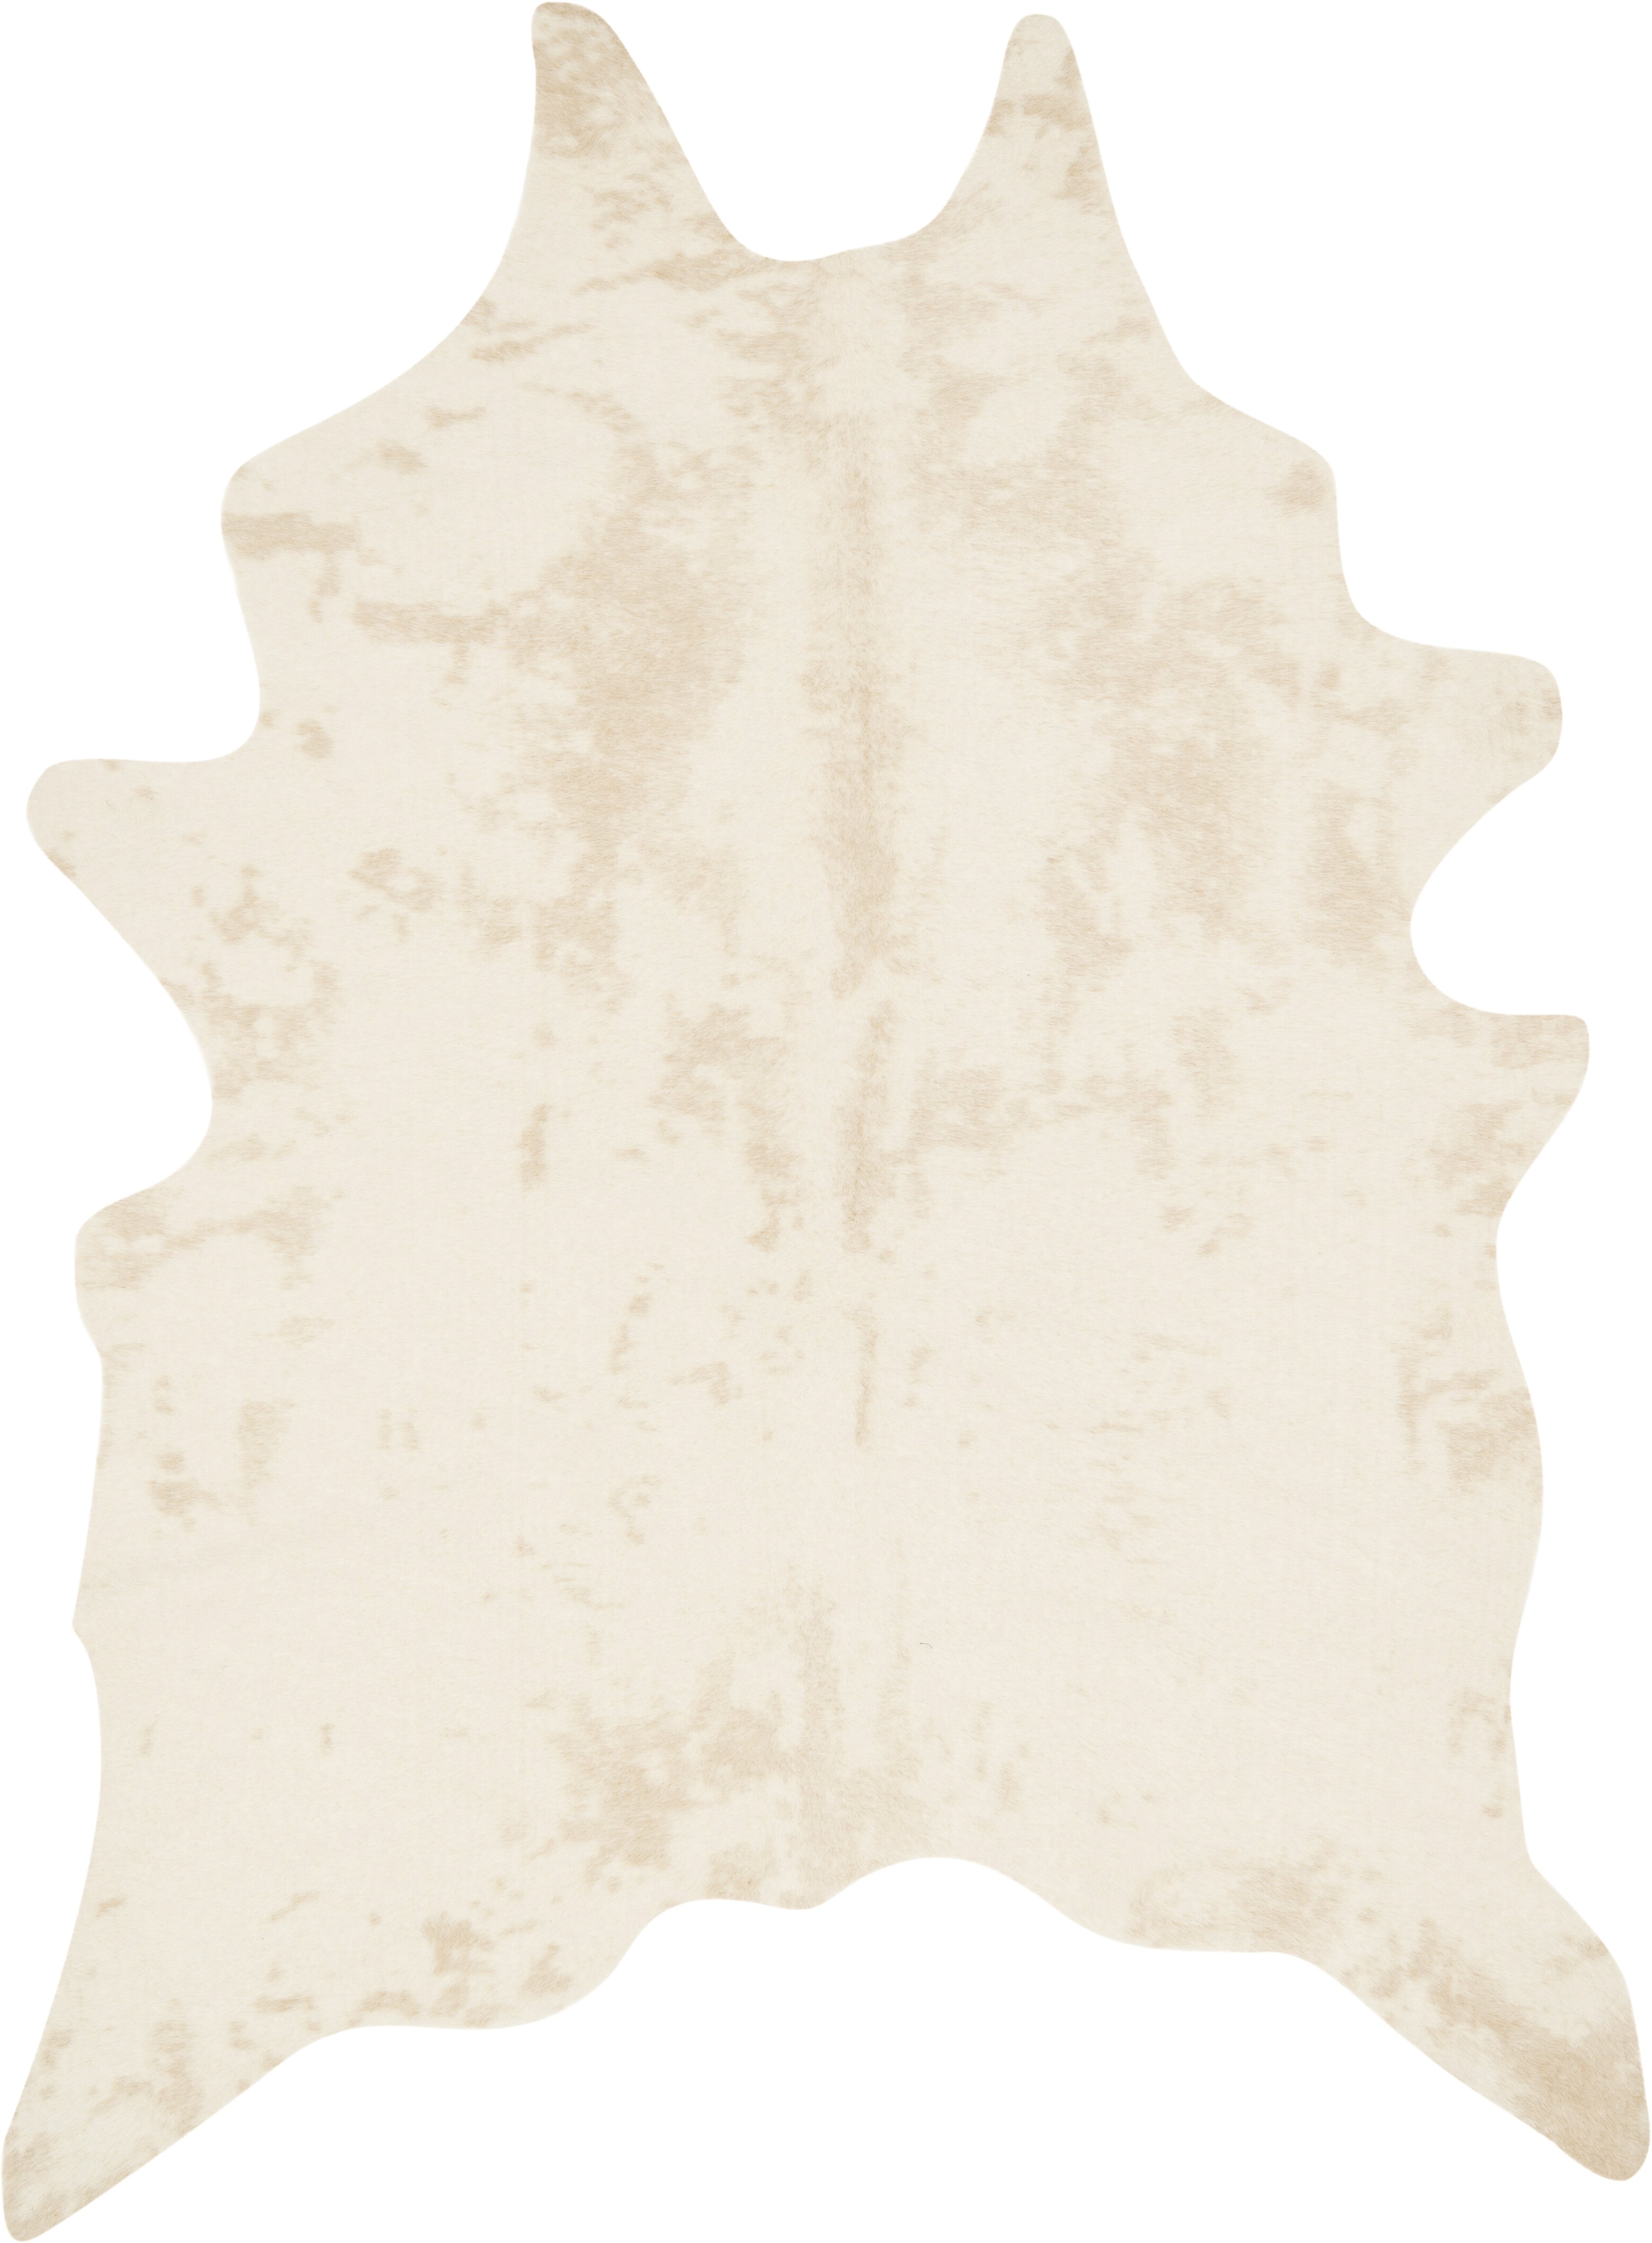 Grand Canyon Hide Rug, Ivory, 3'10" x 5' - Image 0